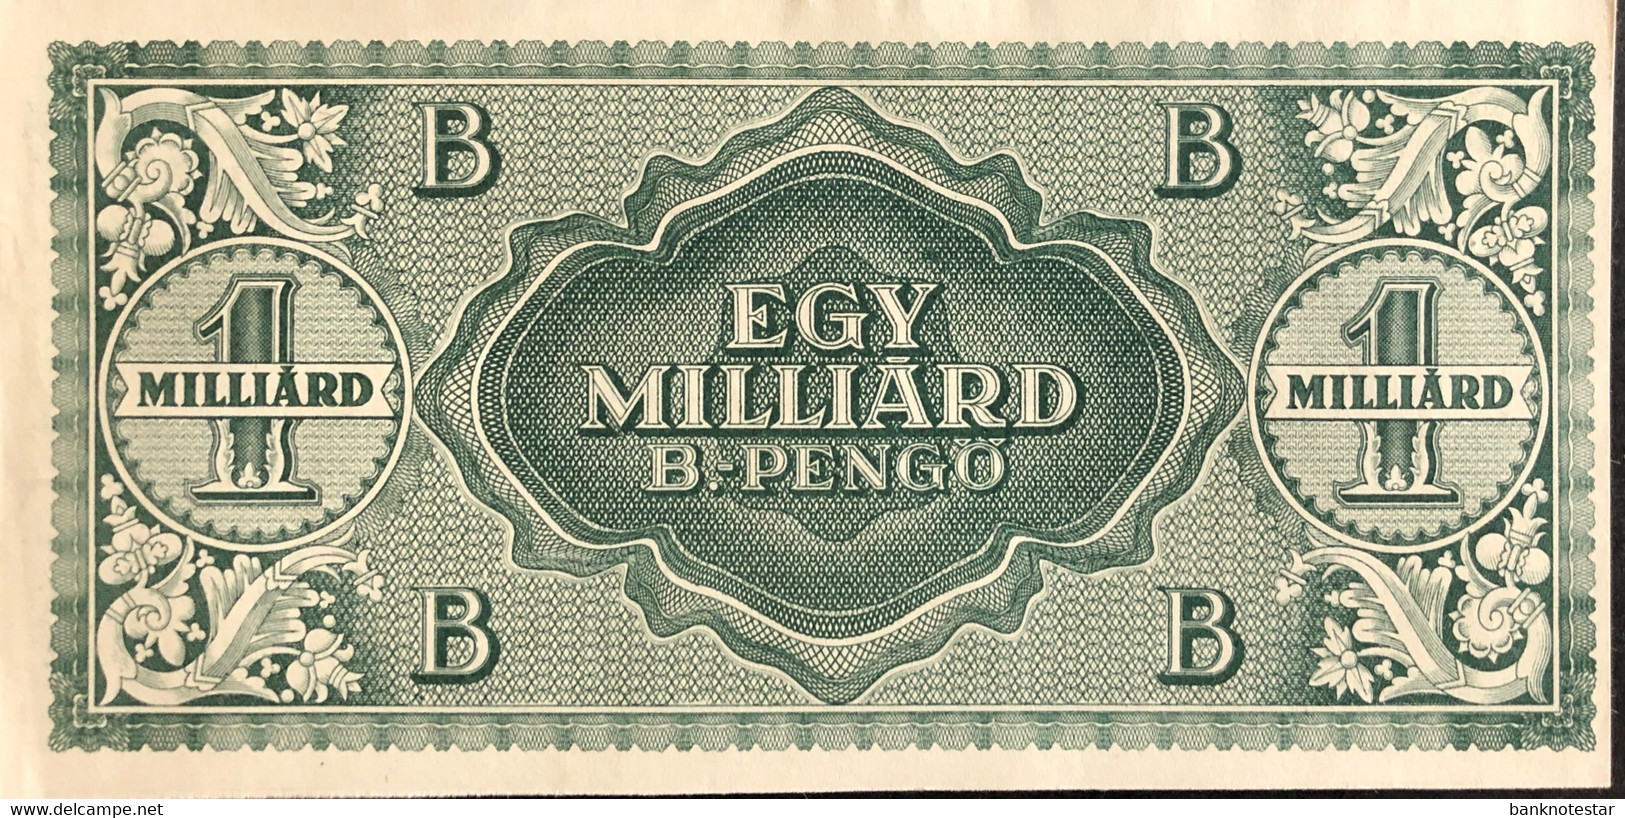 Hungary 1 Milliard B-Pengö, P-137 (3.6.1946) - About Uncirculated - RARE - Hongrie